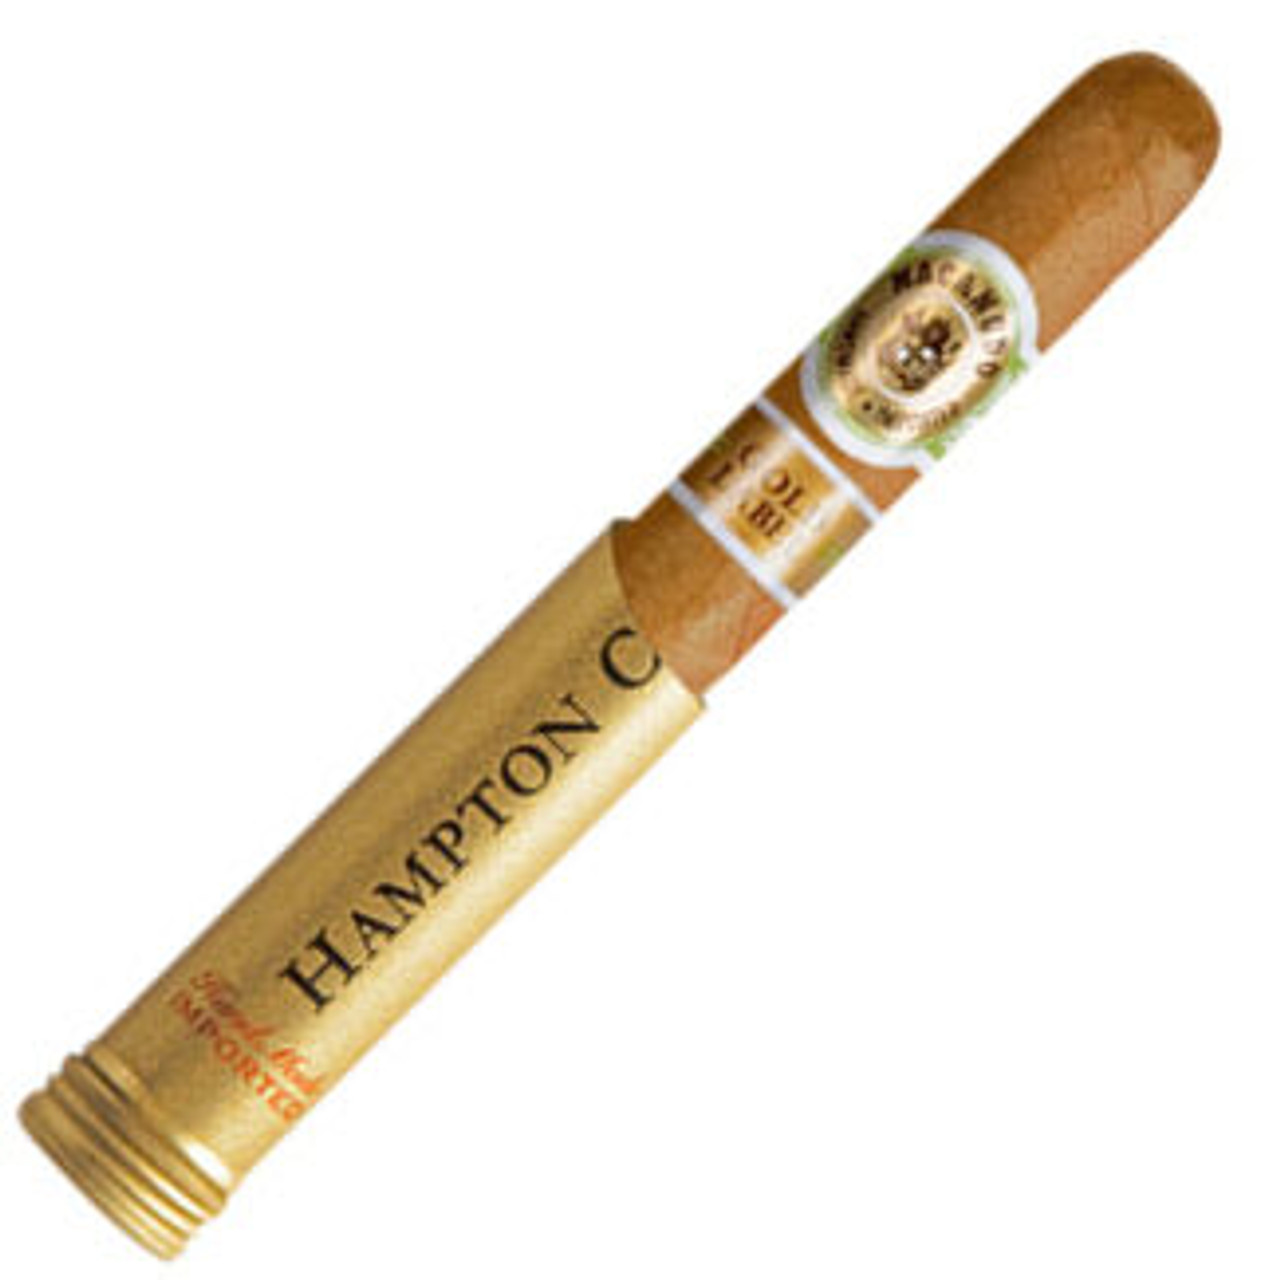 Macanudo Gold Hampton Court Tubed Cigars - 5.5 x 42 Single